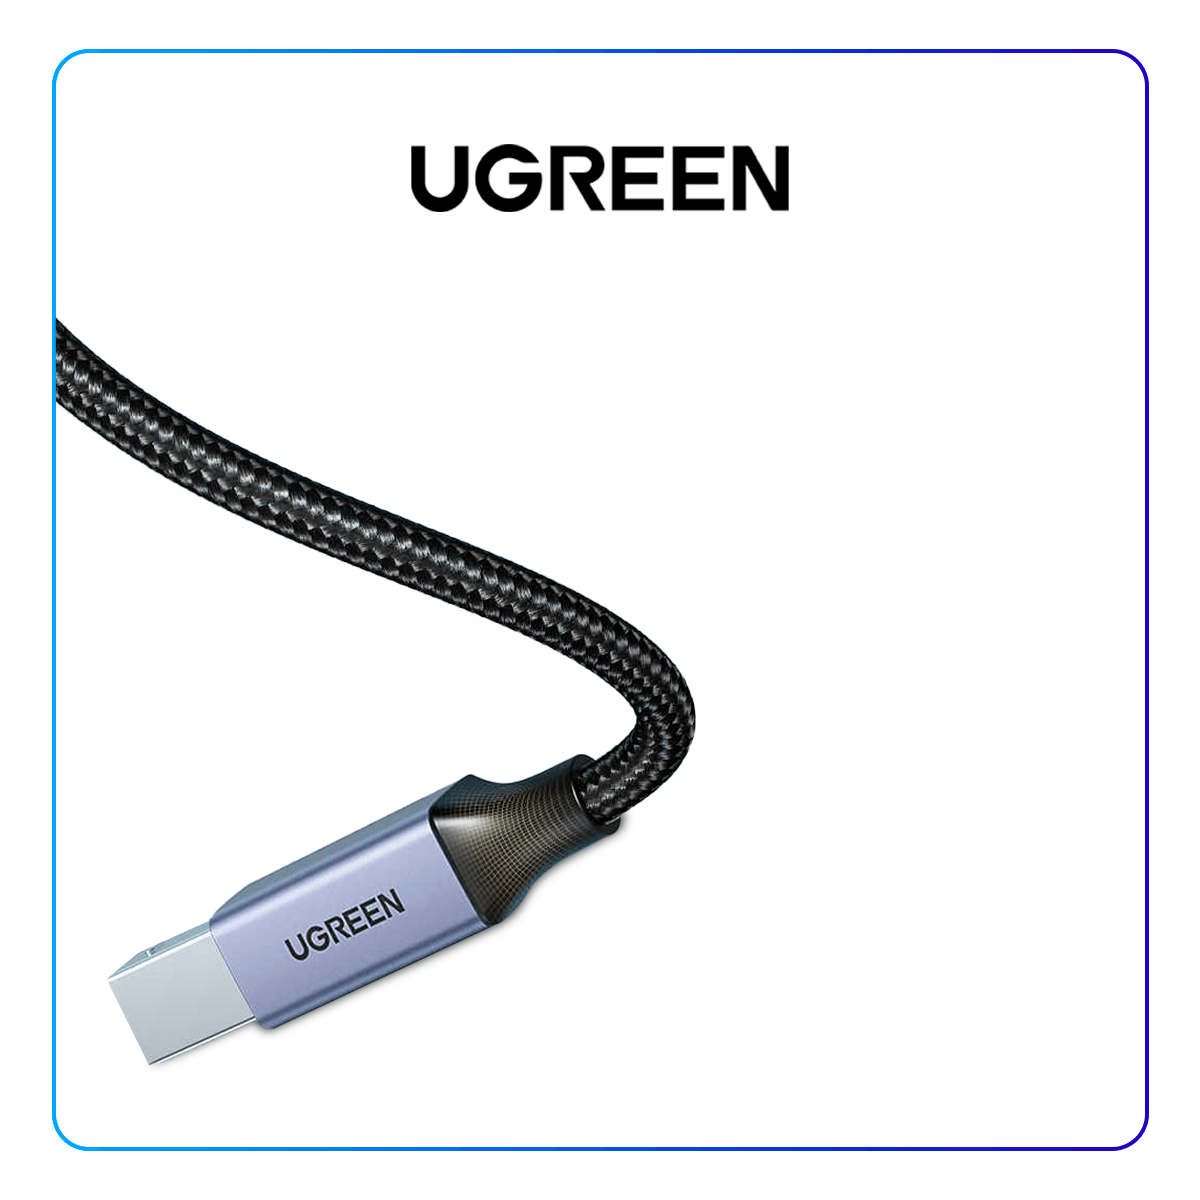 UGREEN CABLE EXTENSOR USB 3.0 MACHO/HEMBRA 3M US129 ( 30127 )